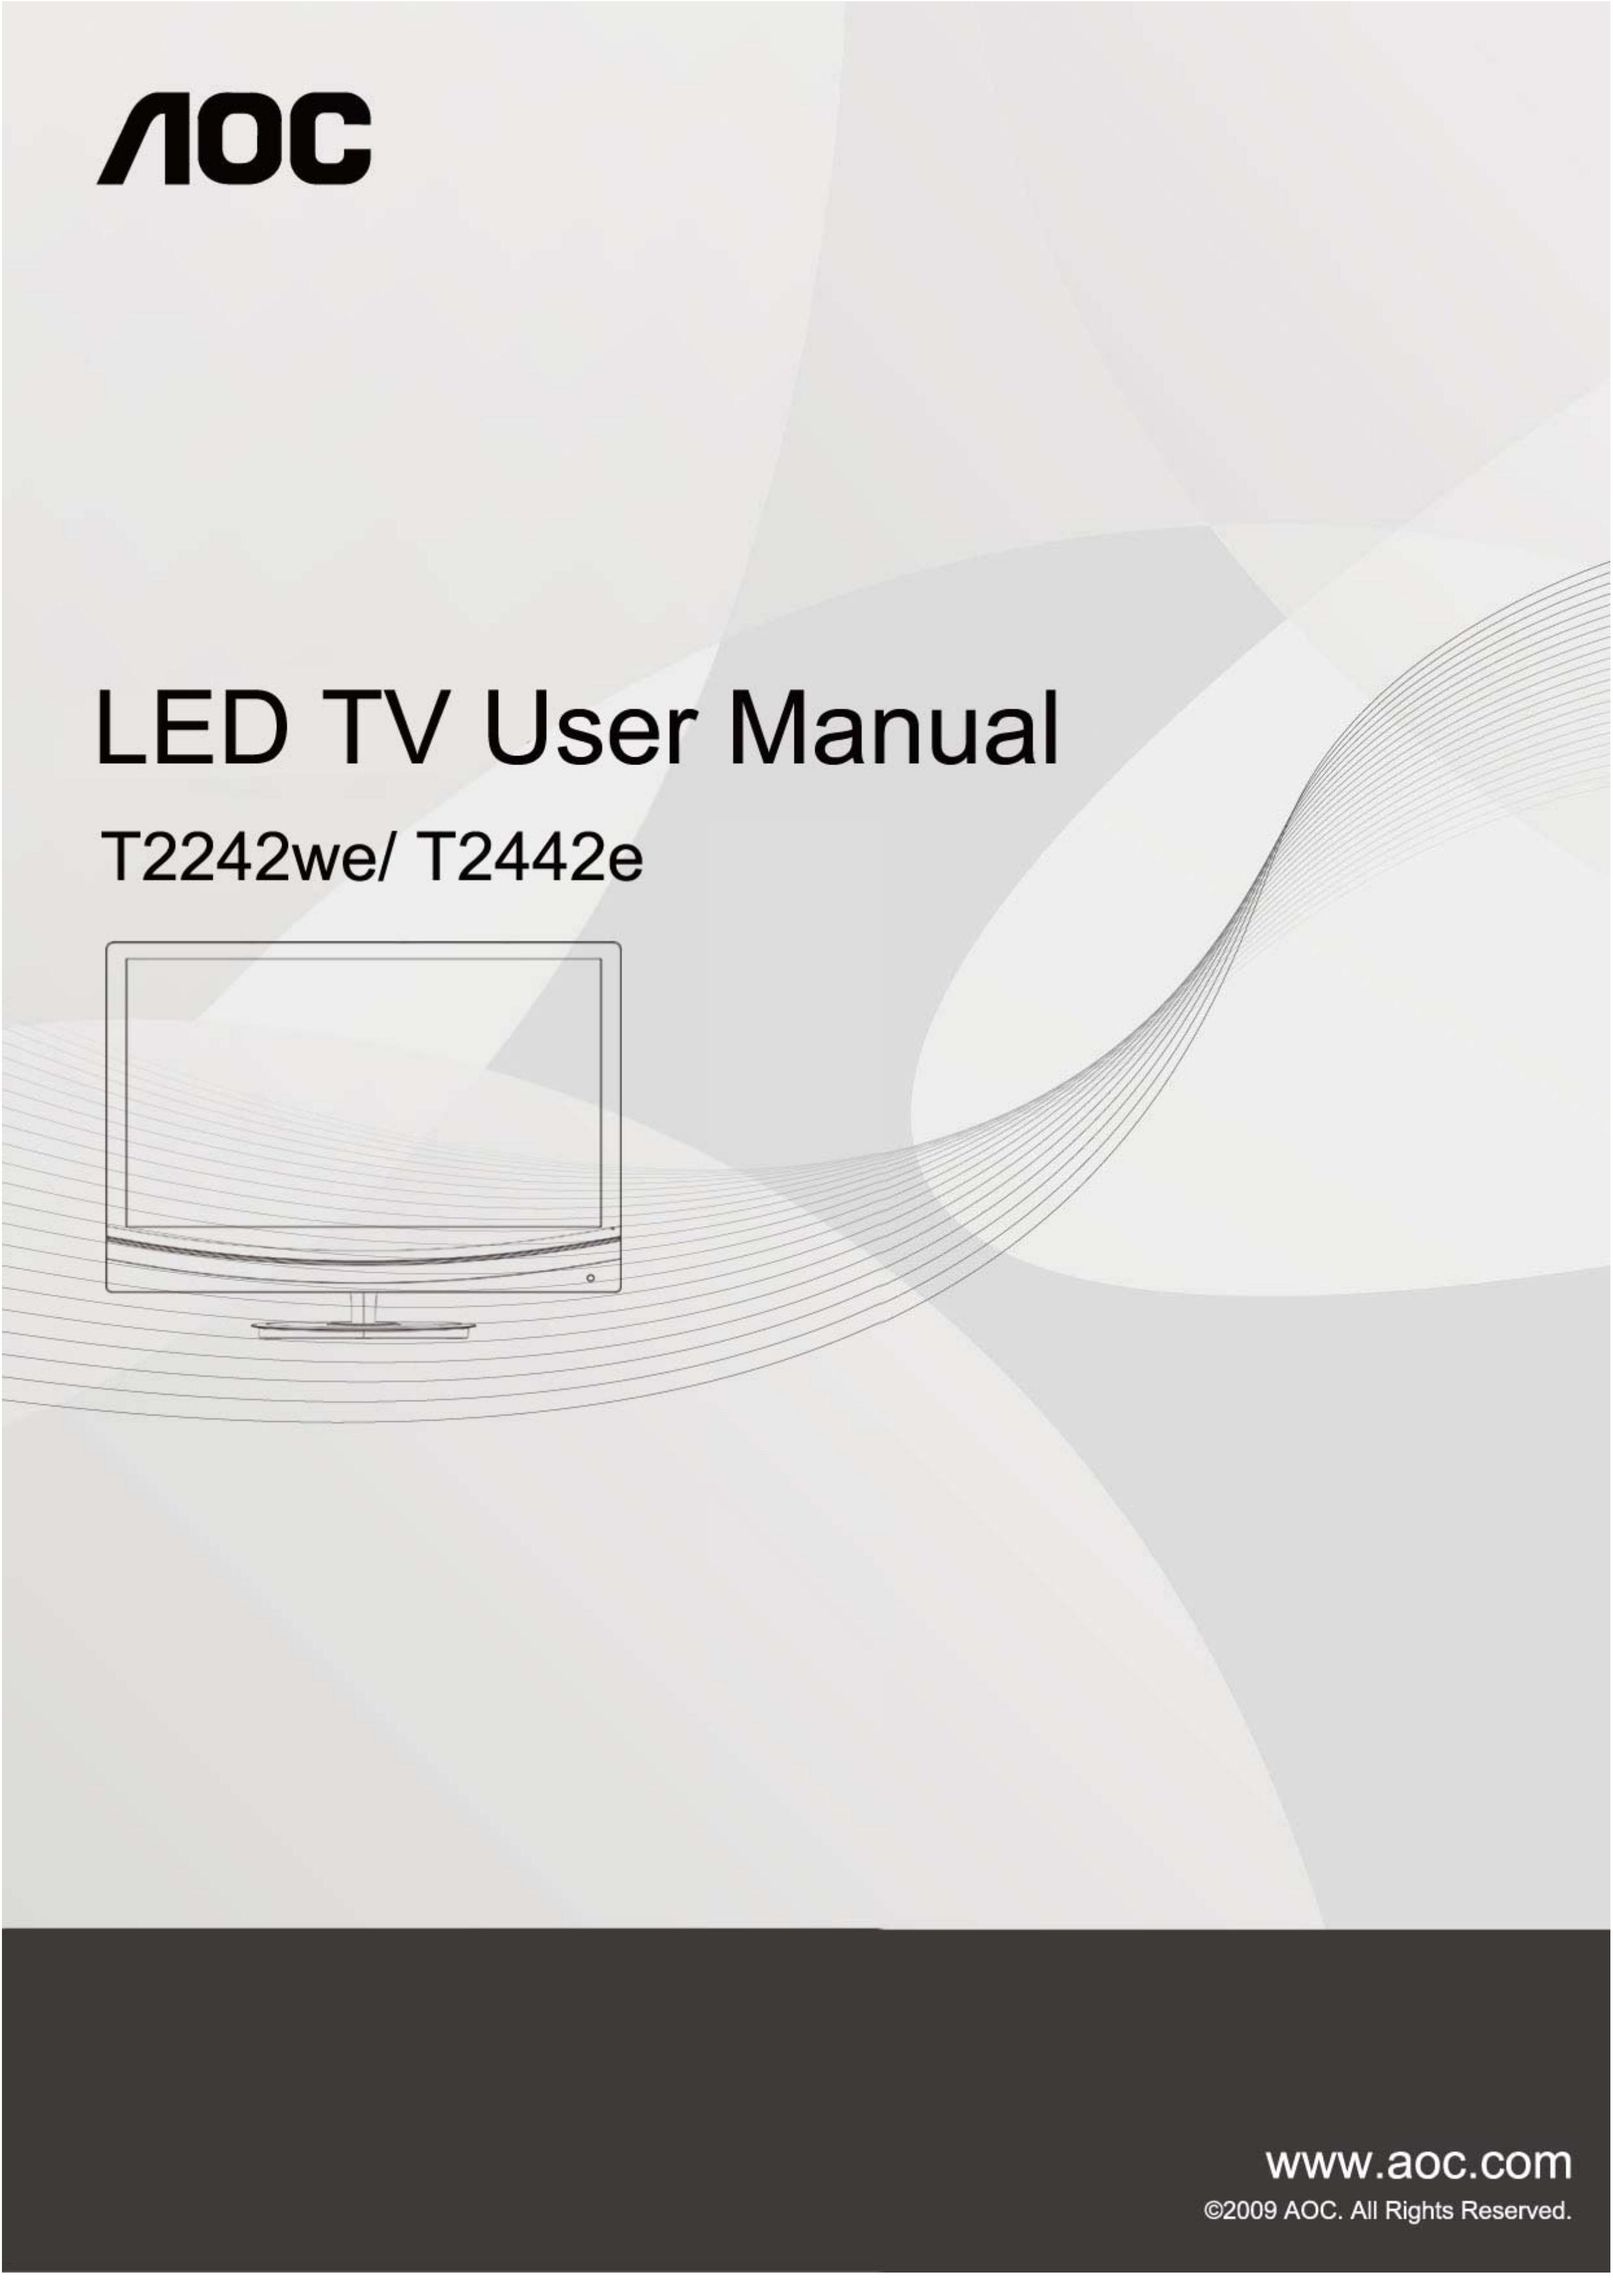 AOC T2442e Car Satellite TV System User Manual